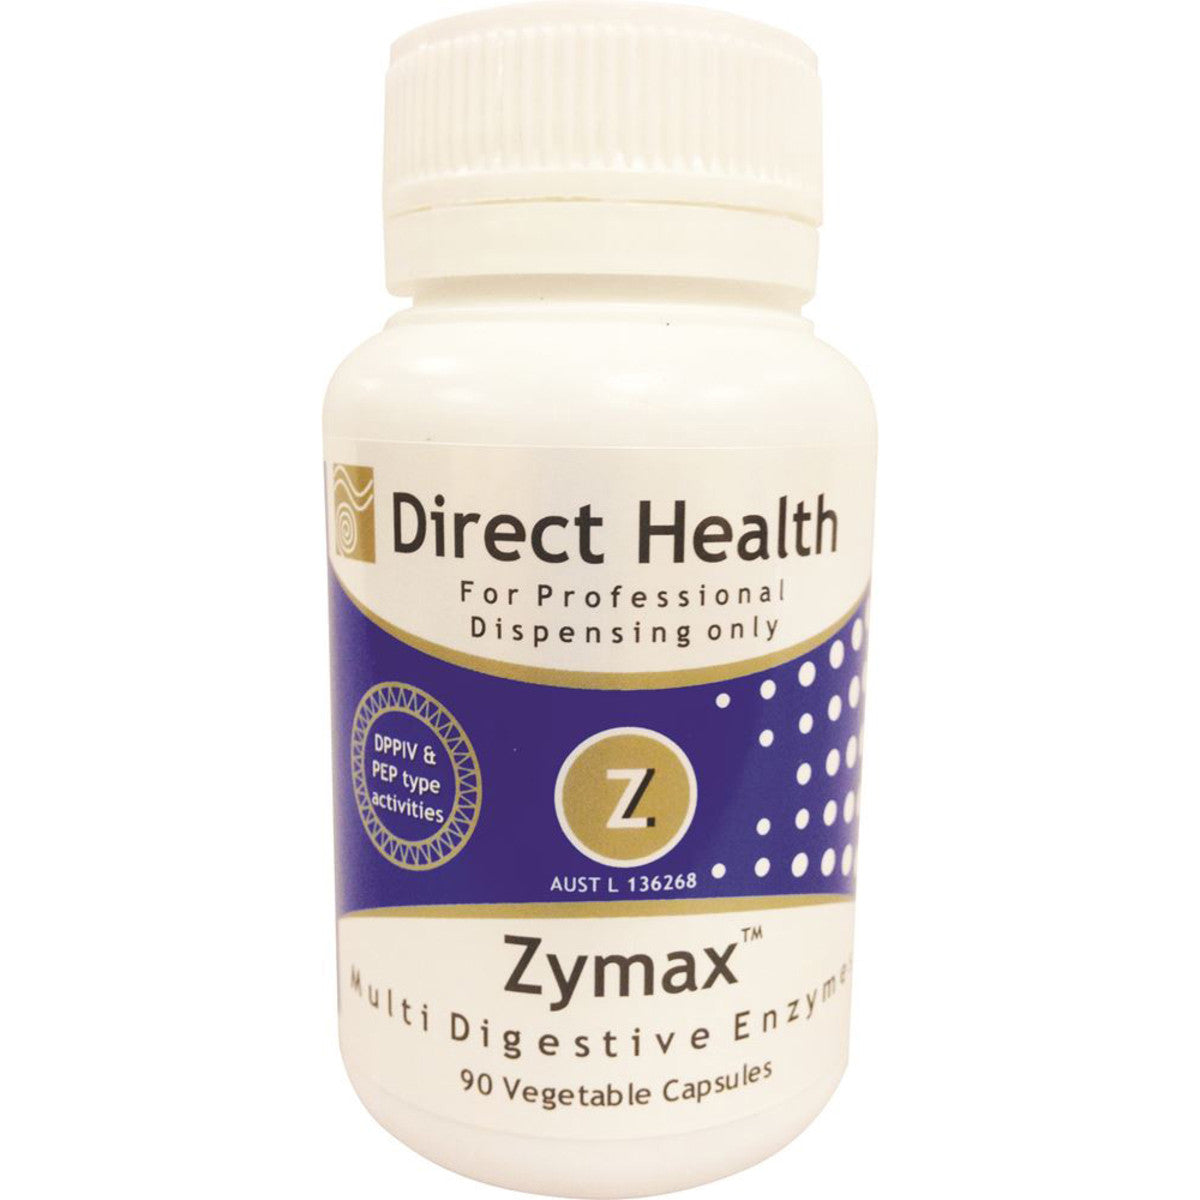 Direct Health - Zymax